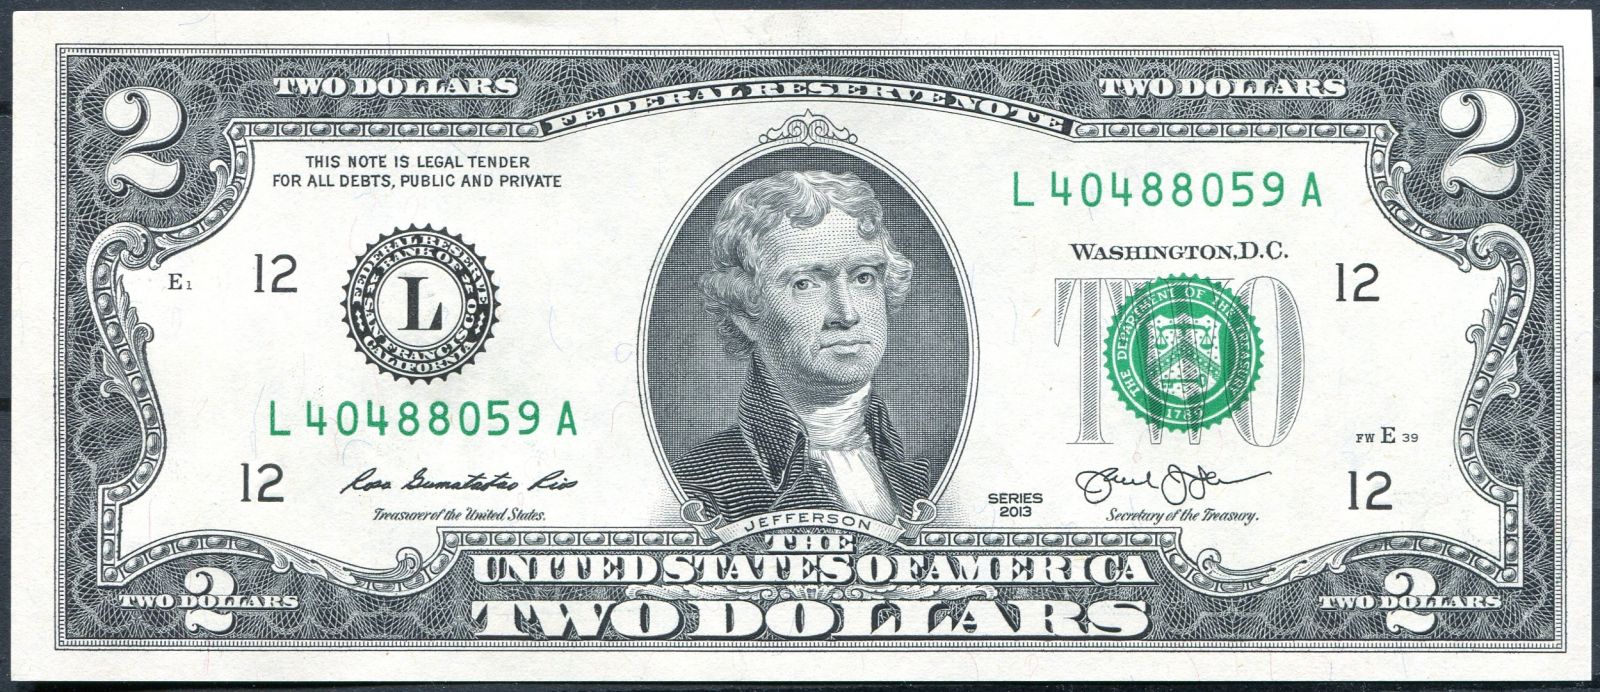 USA - P 538 - 2 dollars (L 12 - San Francisco) 2013 série - UNC